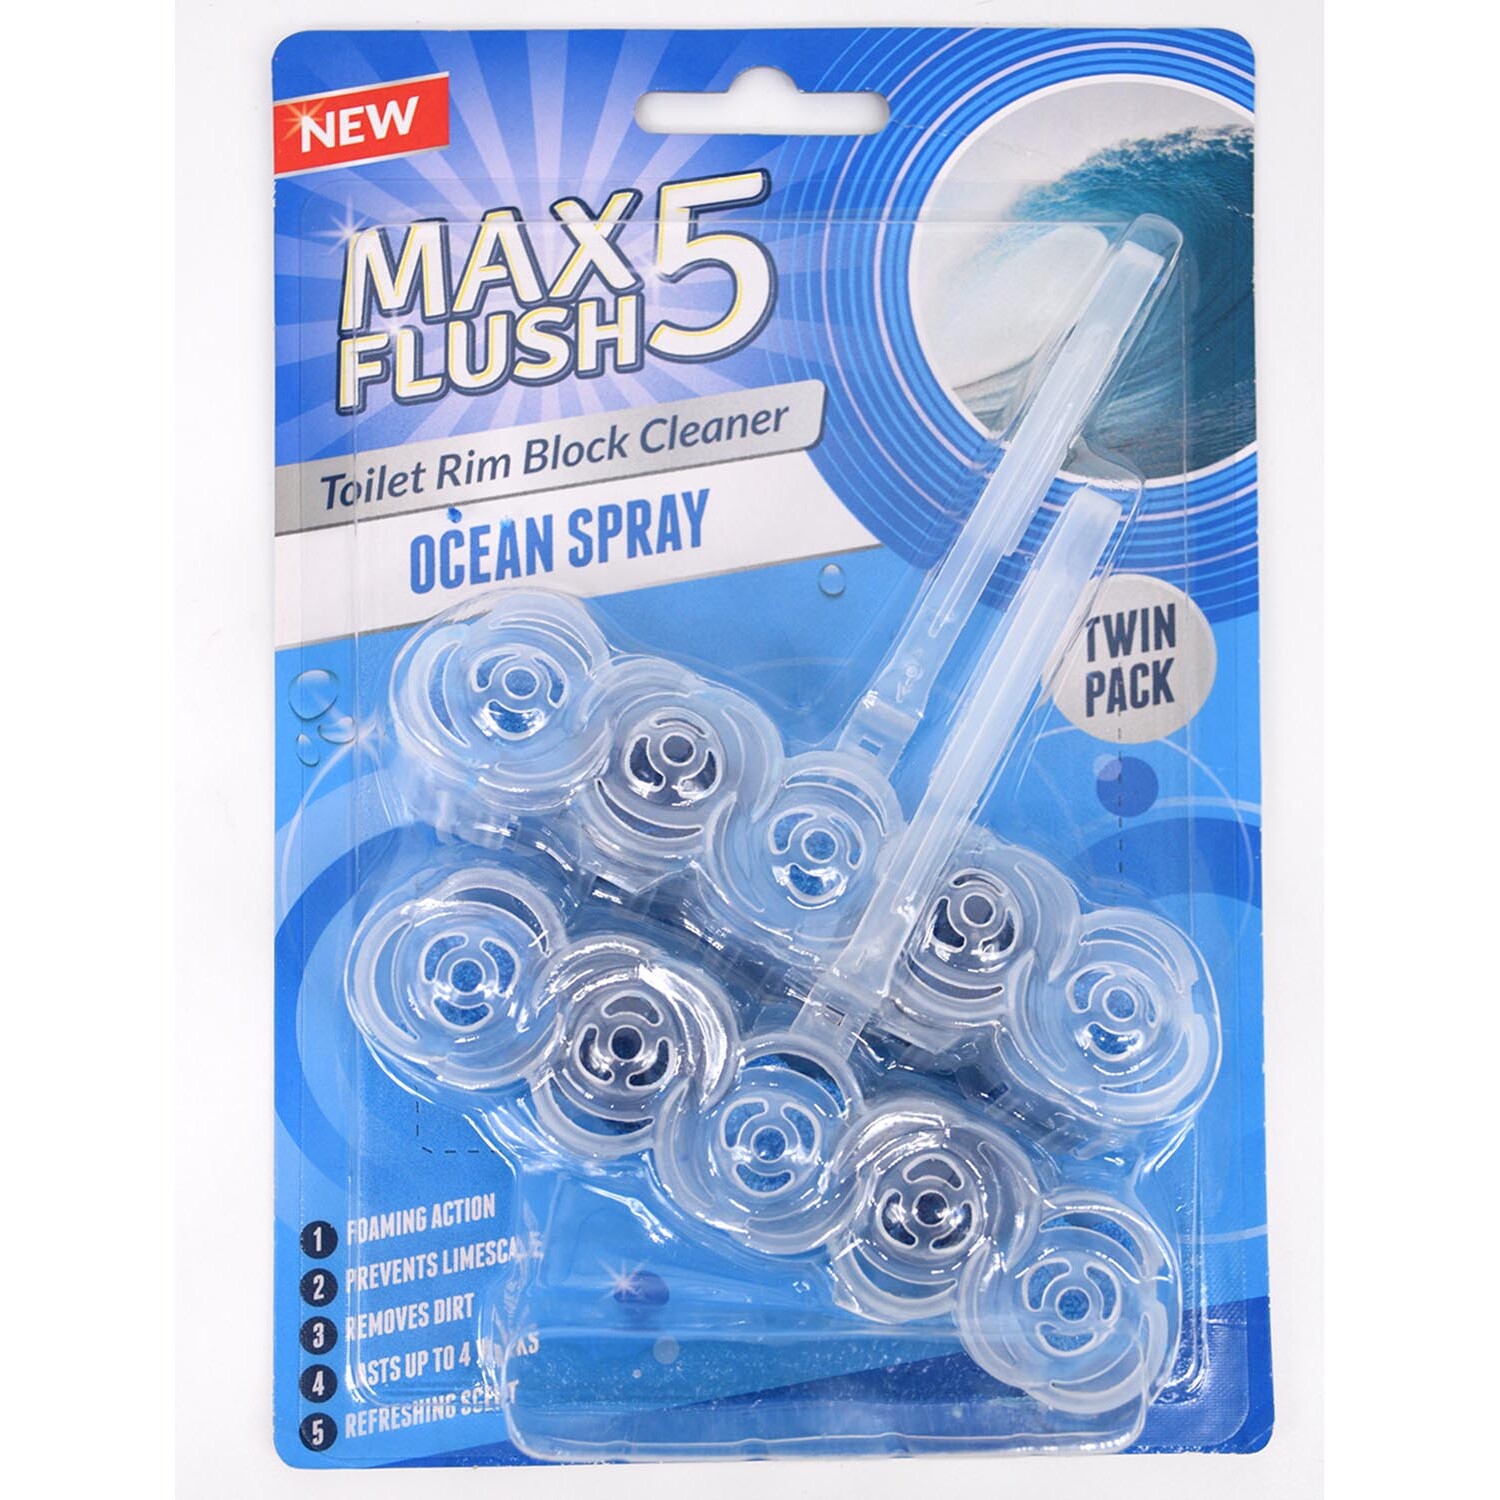 Max Flush Toilet Rim Block Cleaner - Ocean Spray Image